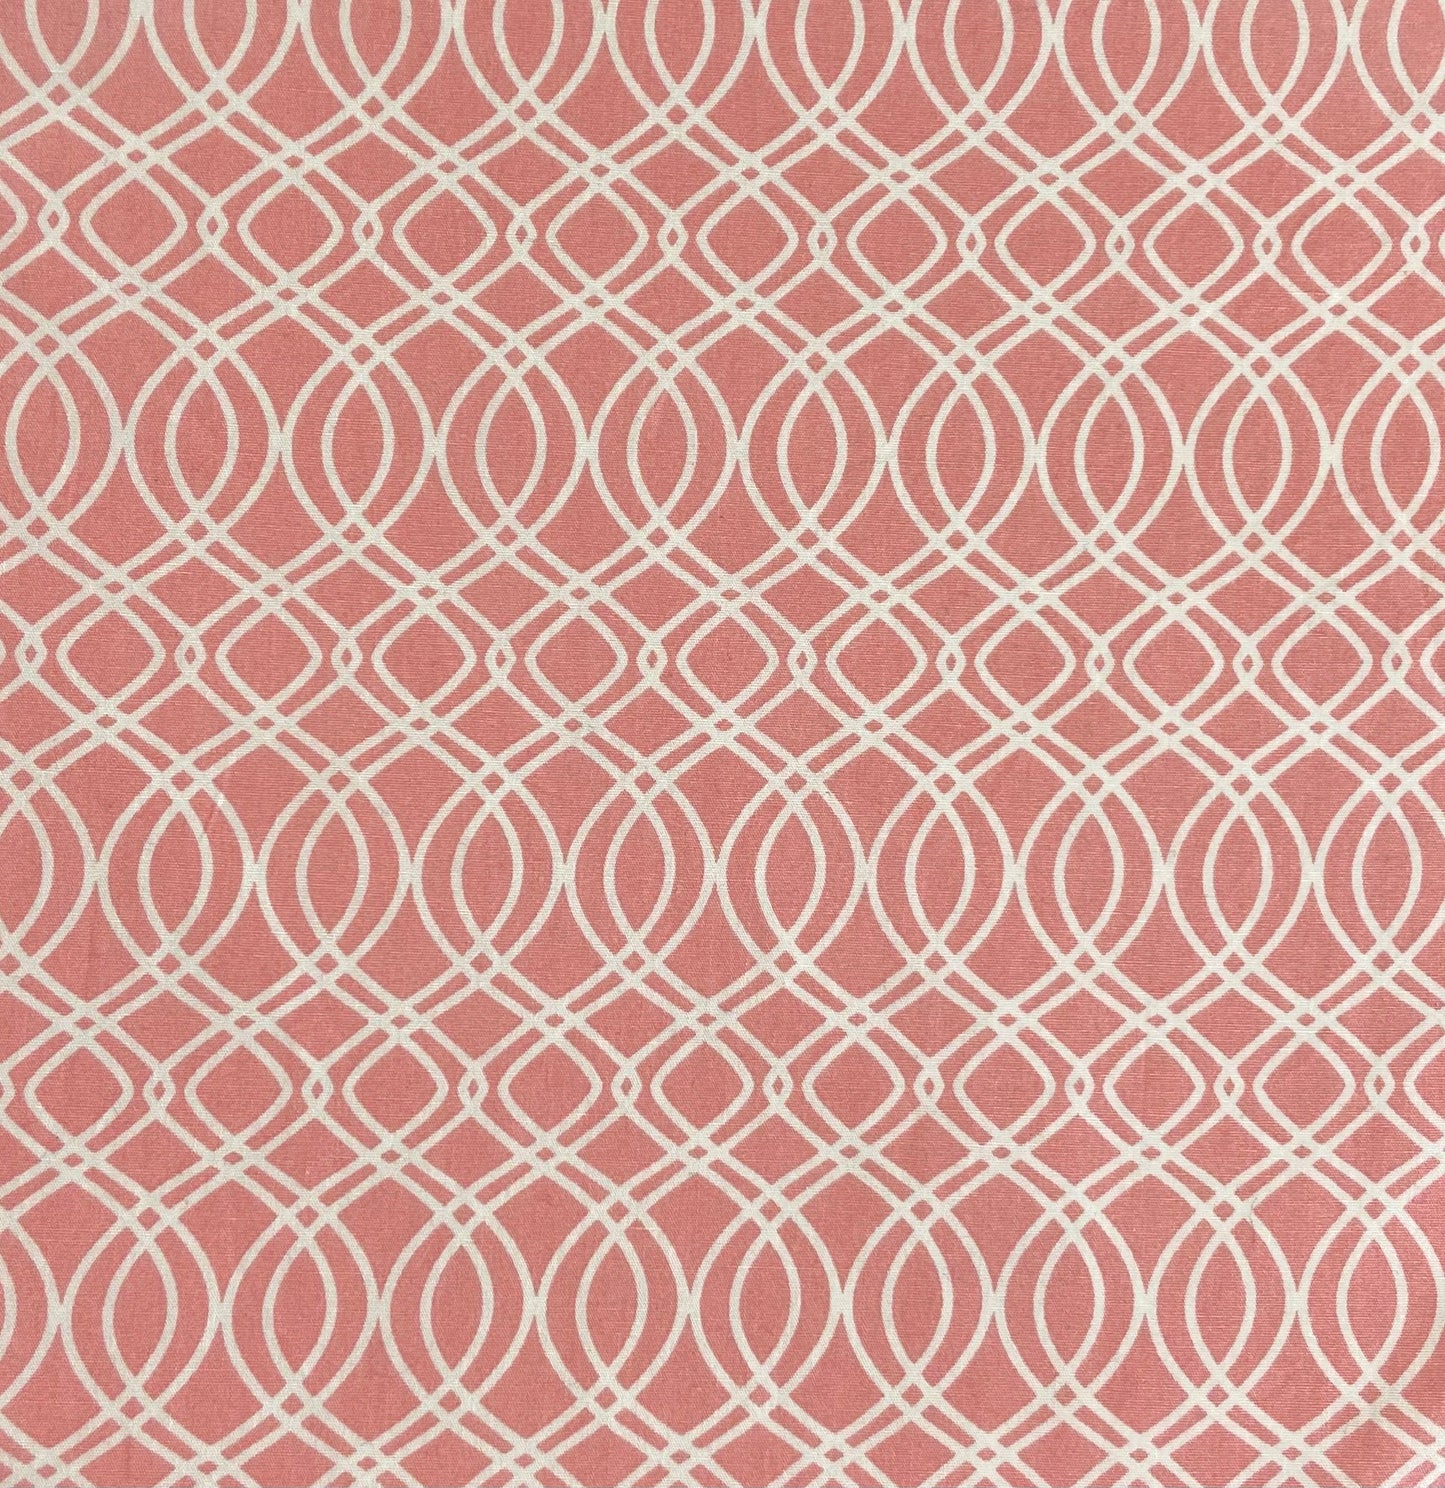 Reusable Bowl Cover (Peach/cream geometric fabric)